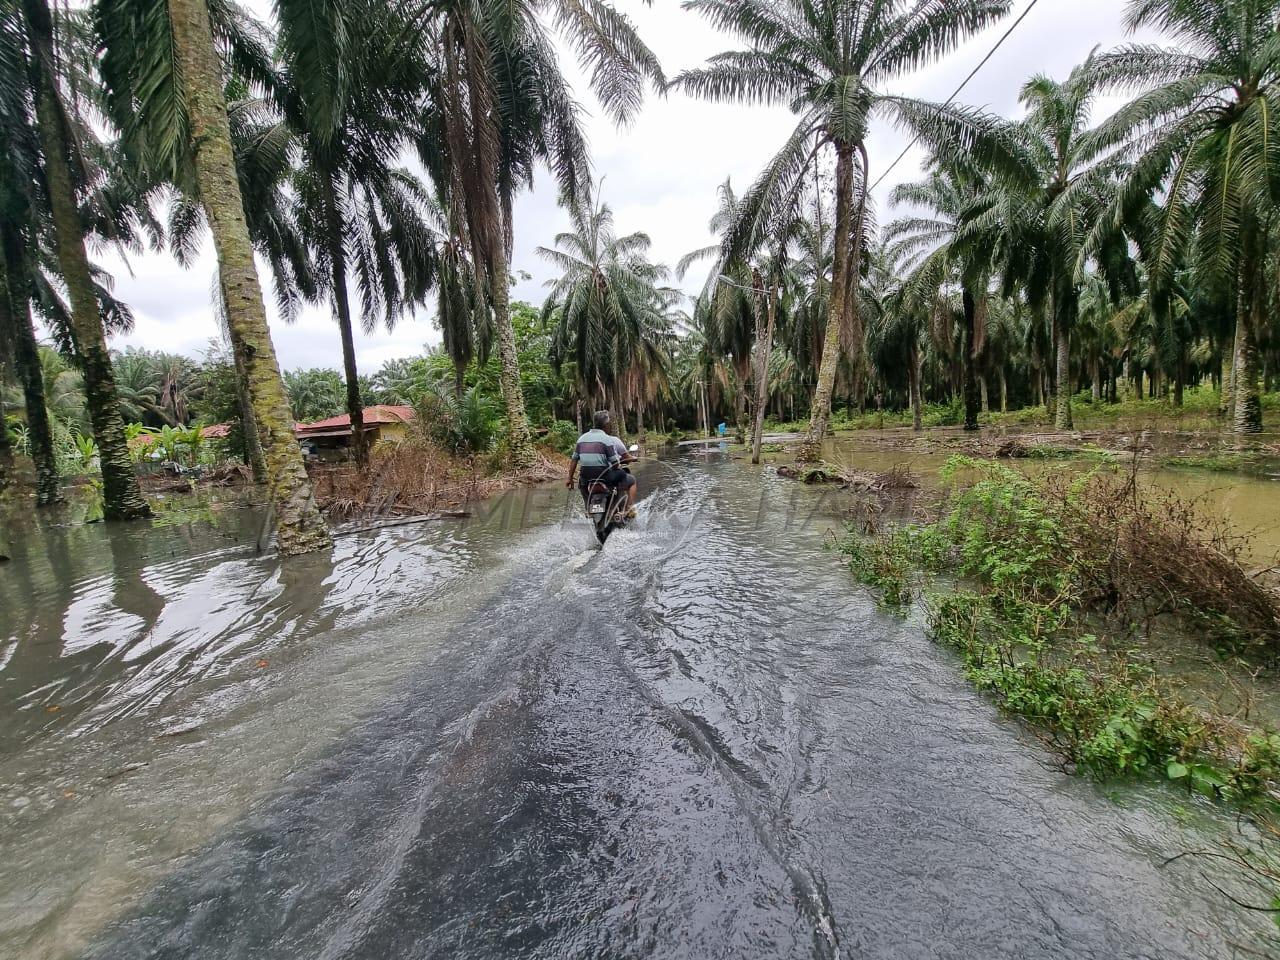 Banjir: Melaka bah akibat limpahan air sungai negeri jiran – Exco